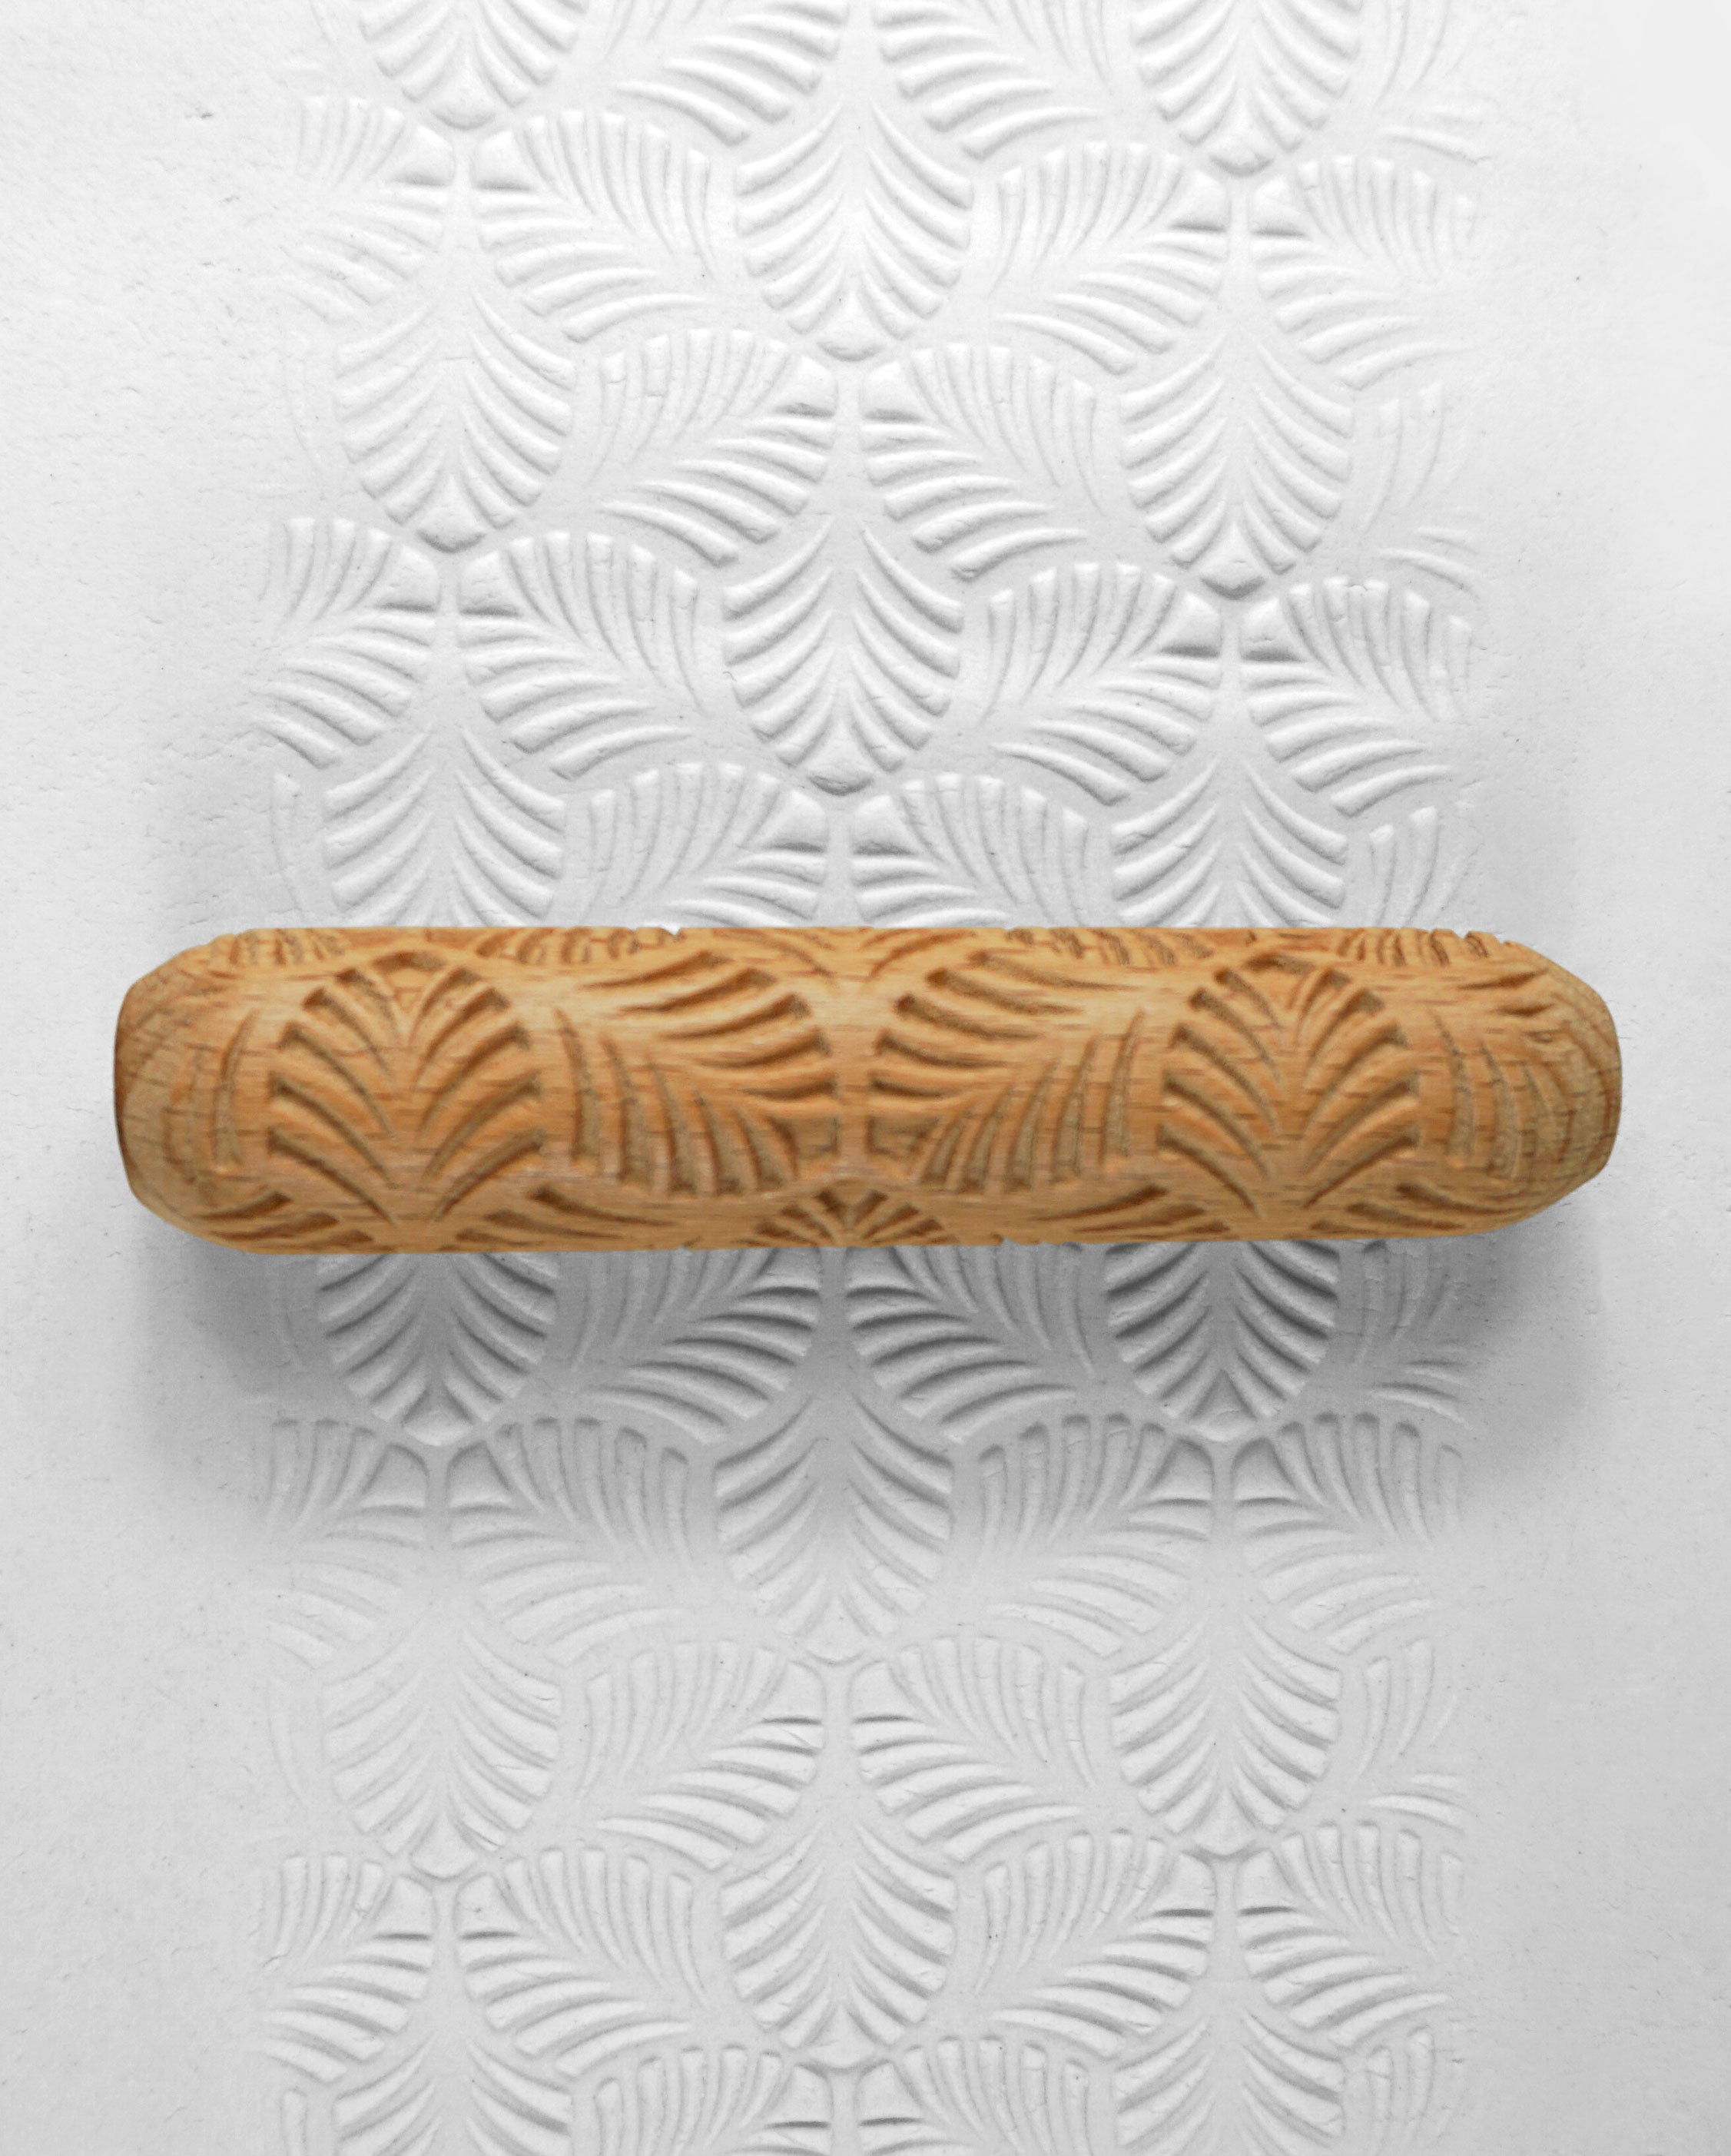 Clay Texture Roller - Arrow Leaf - Sanbao Studio - ChinaClayArt